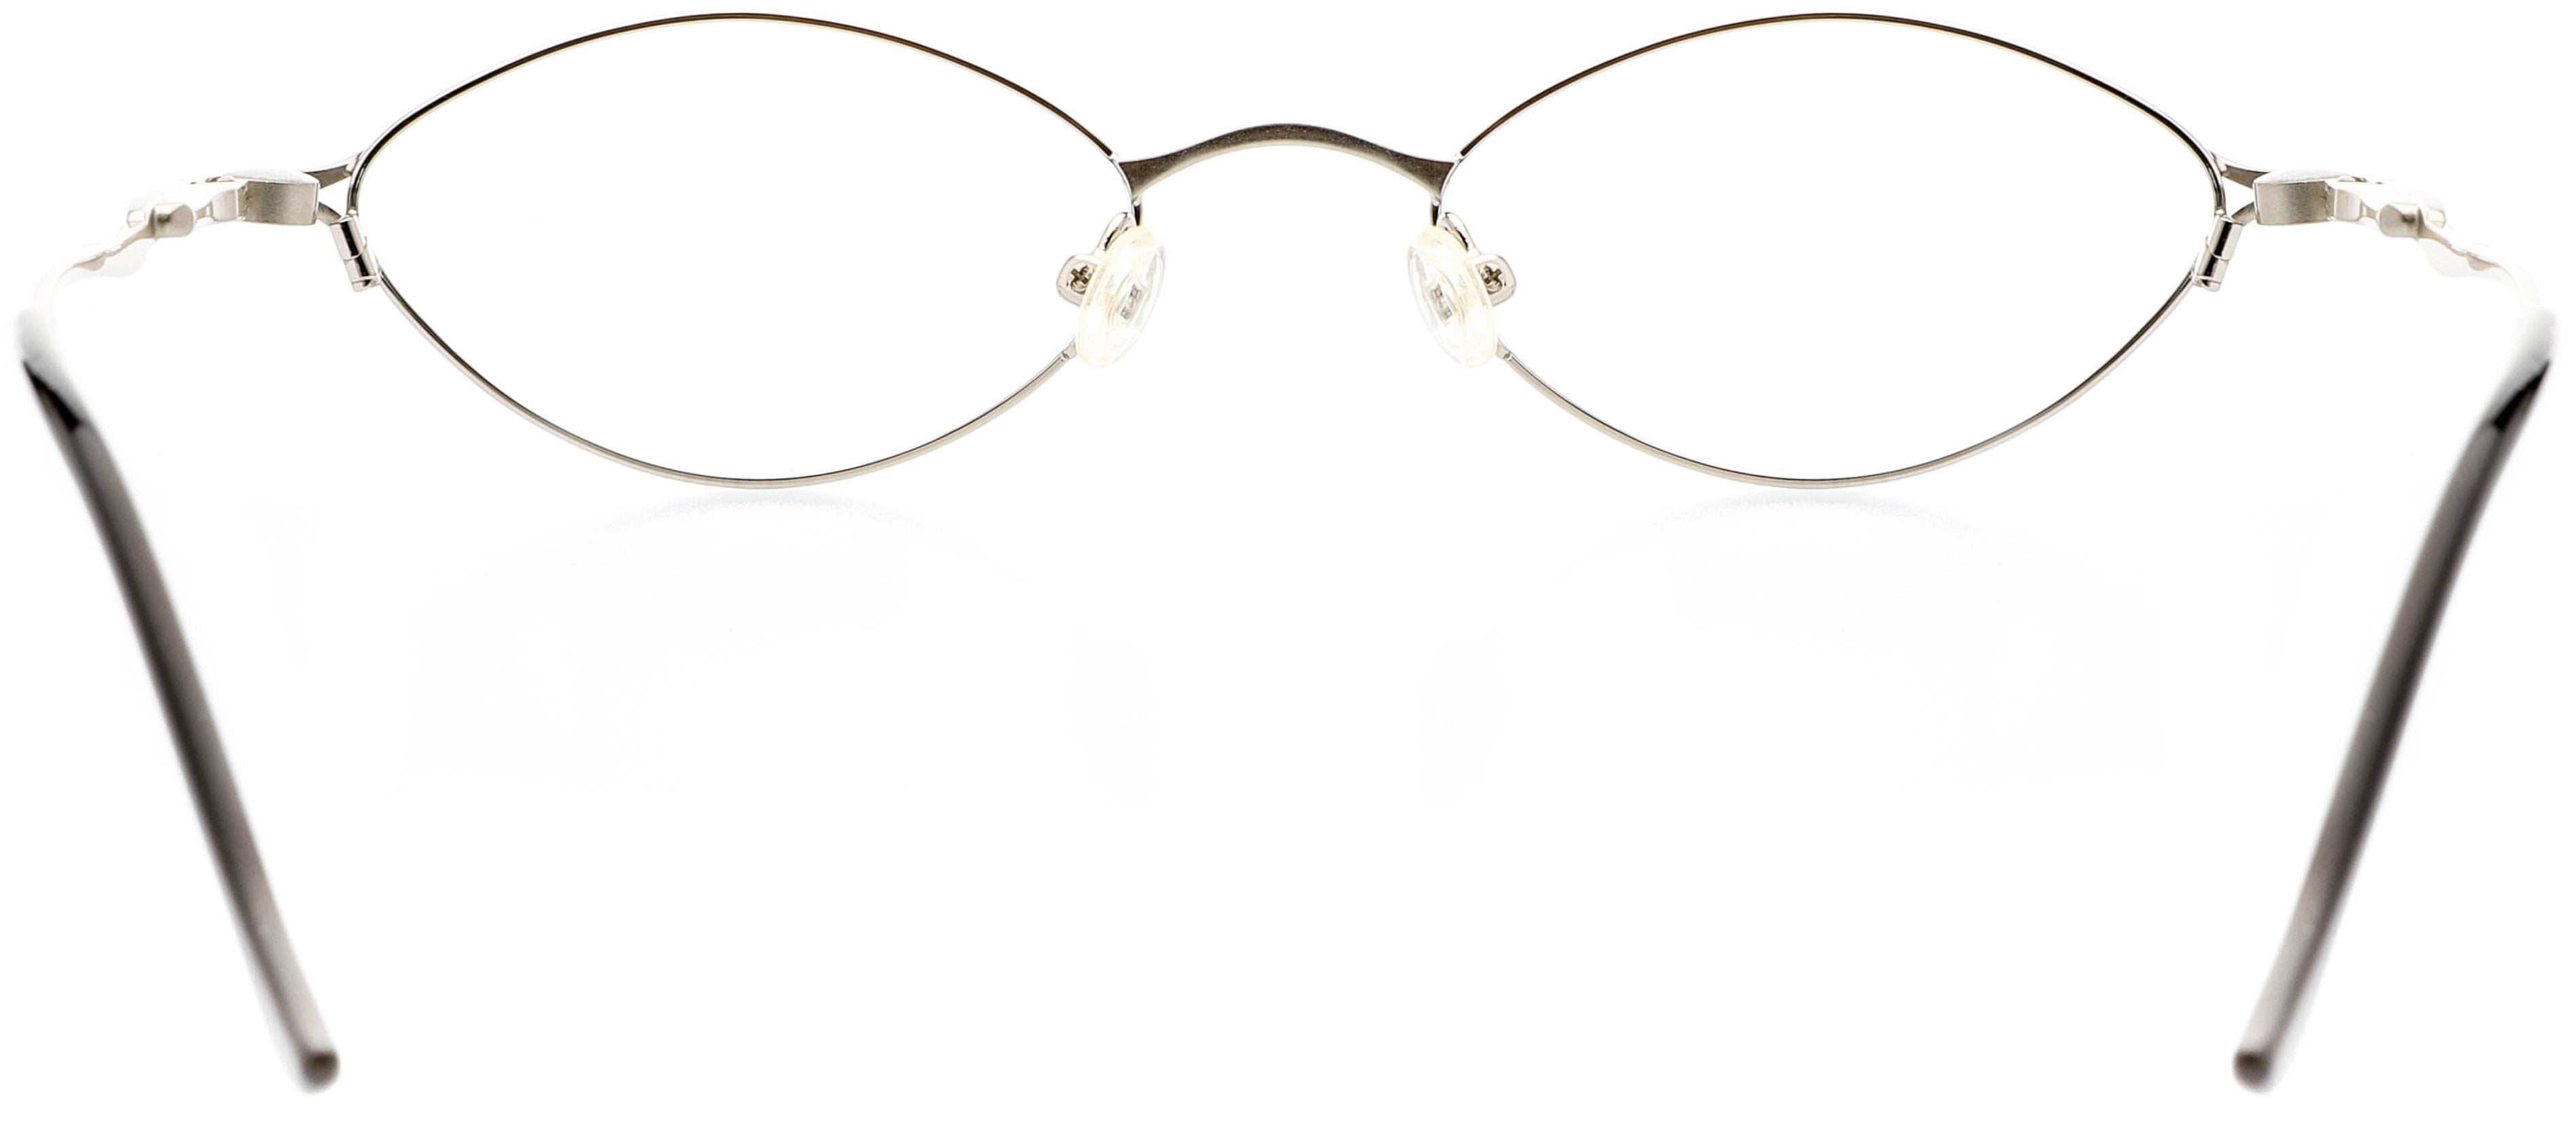 Optical Eyewear - Geometric Oval Shape, Metal Full Rim Frame